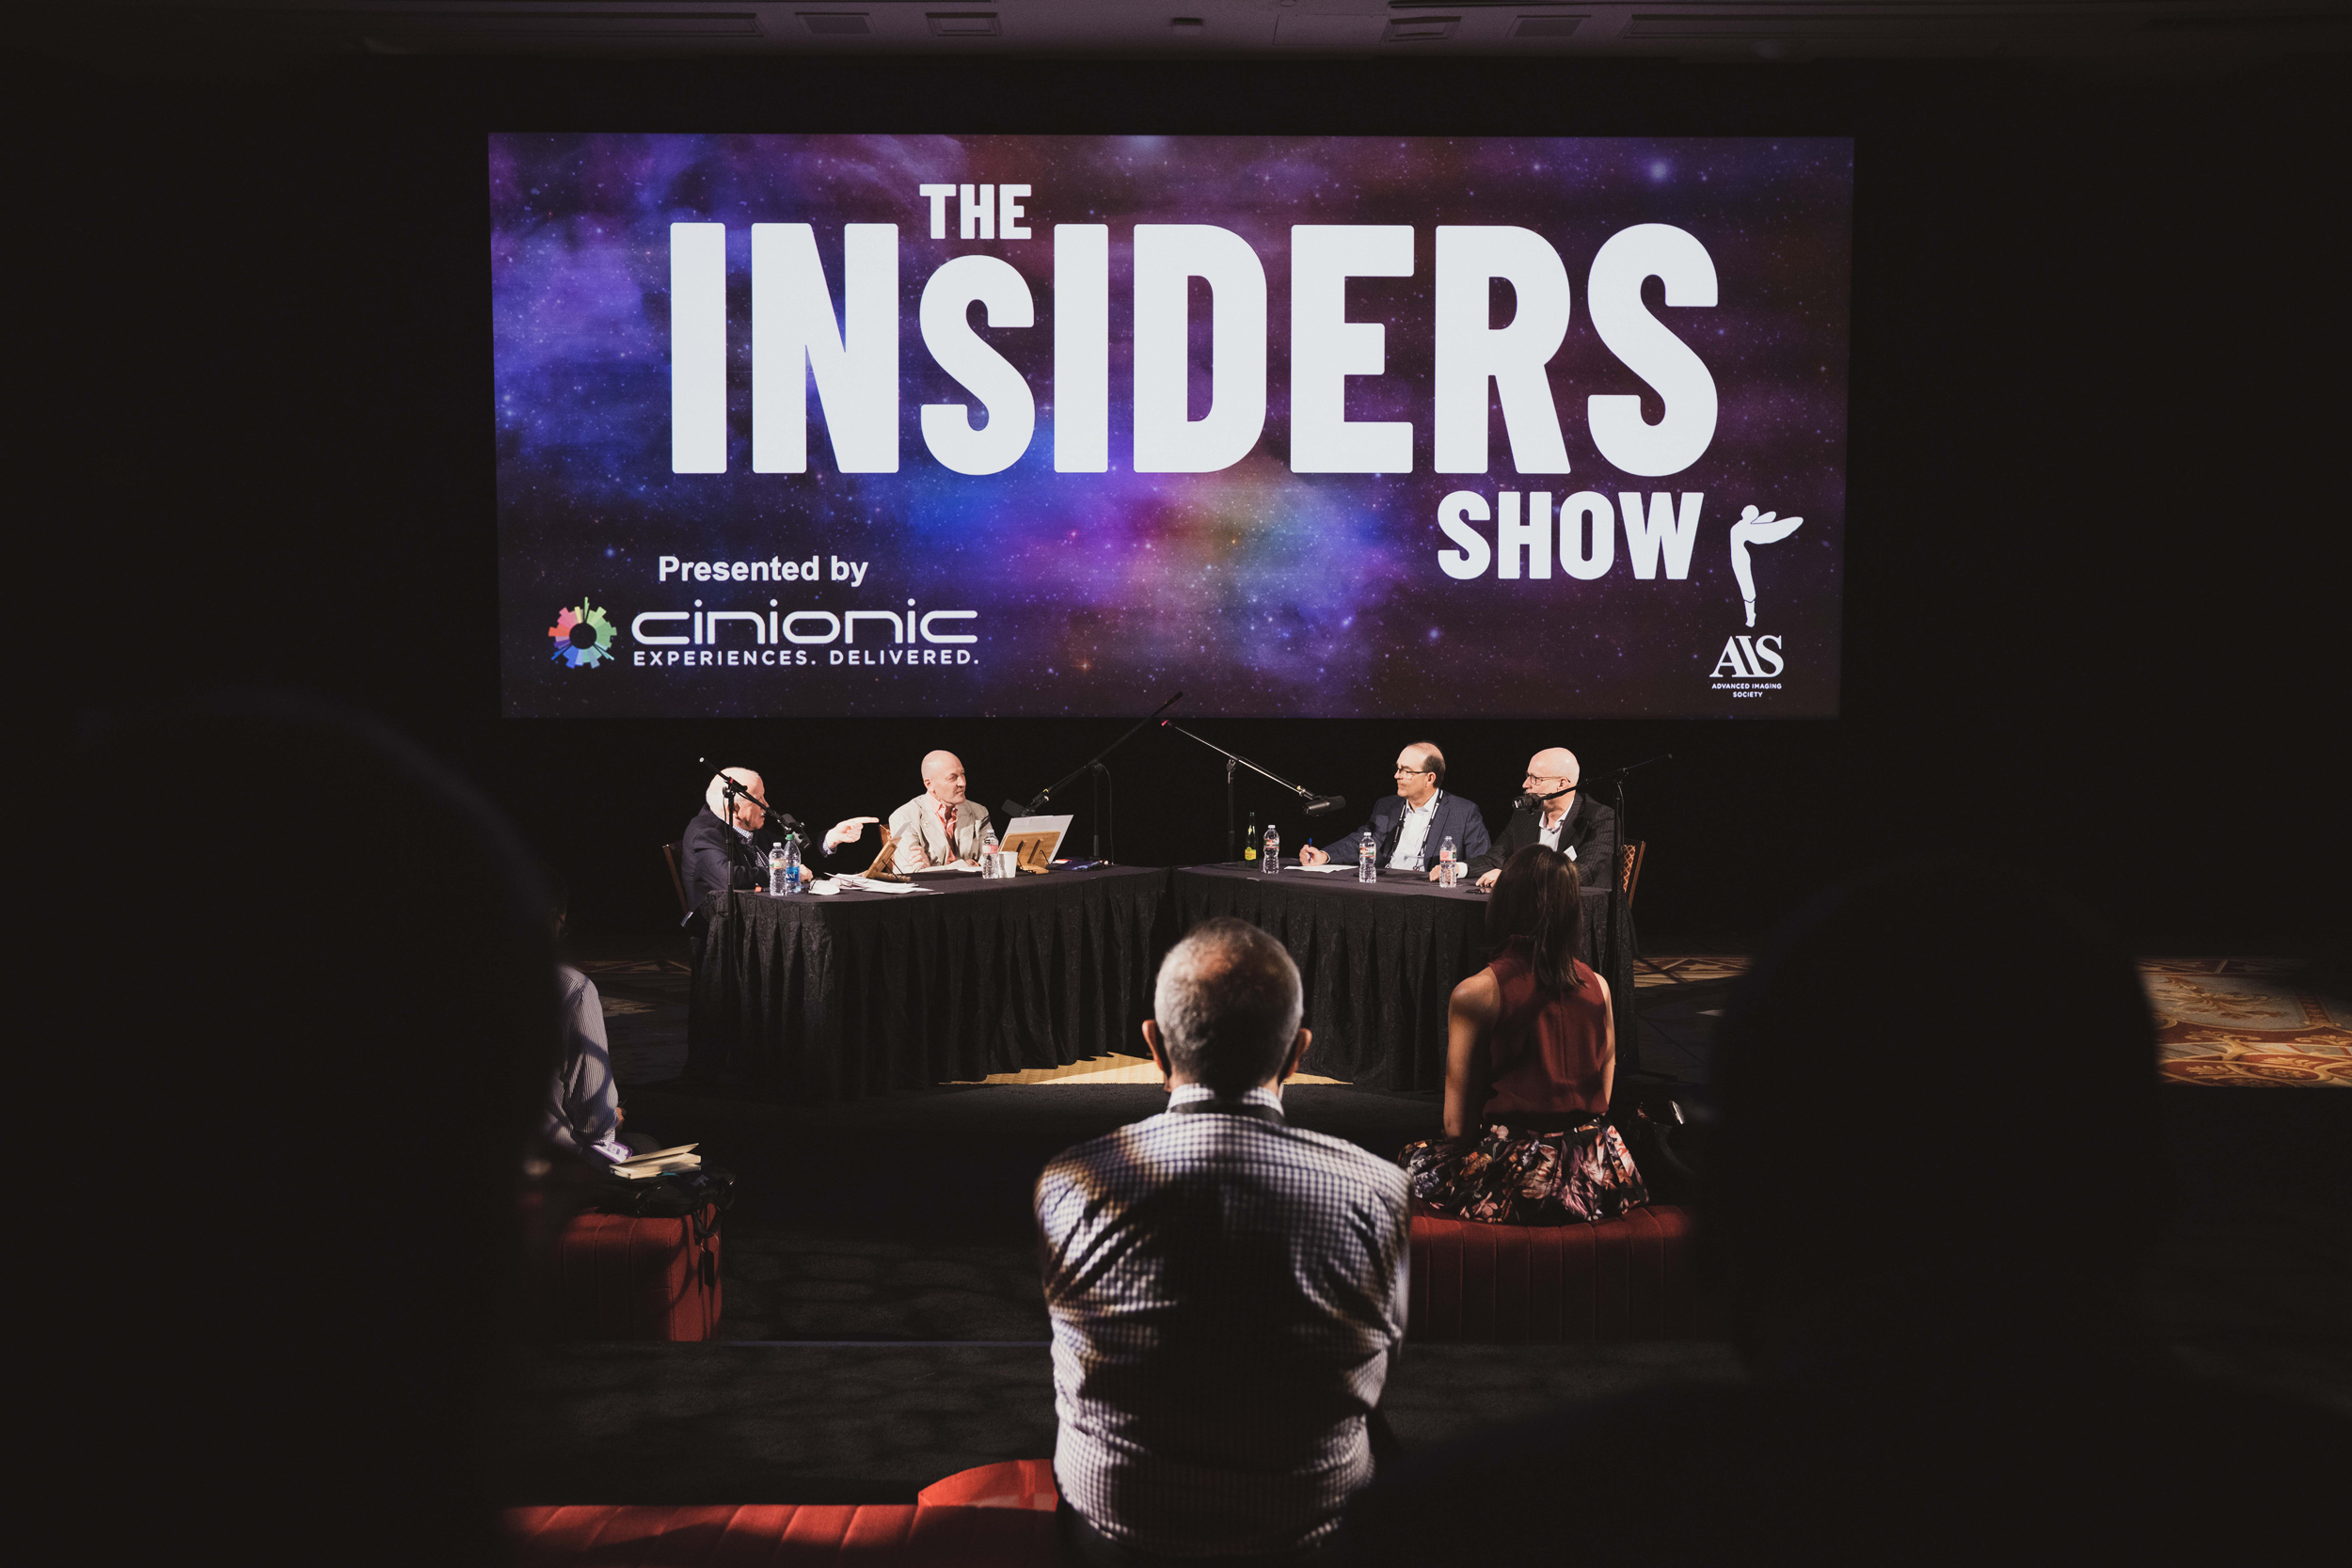 AIS The Insiders Show